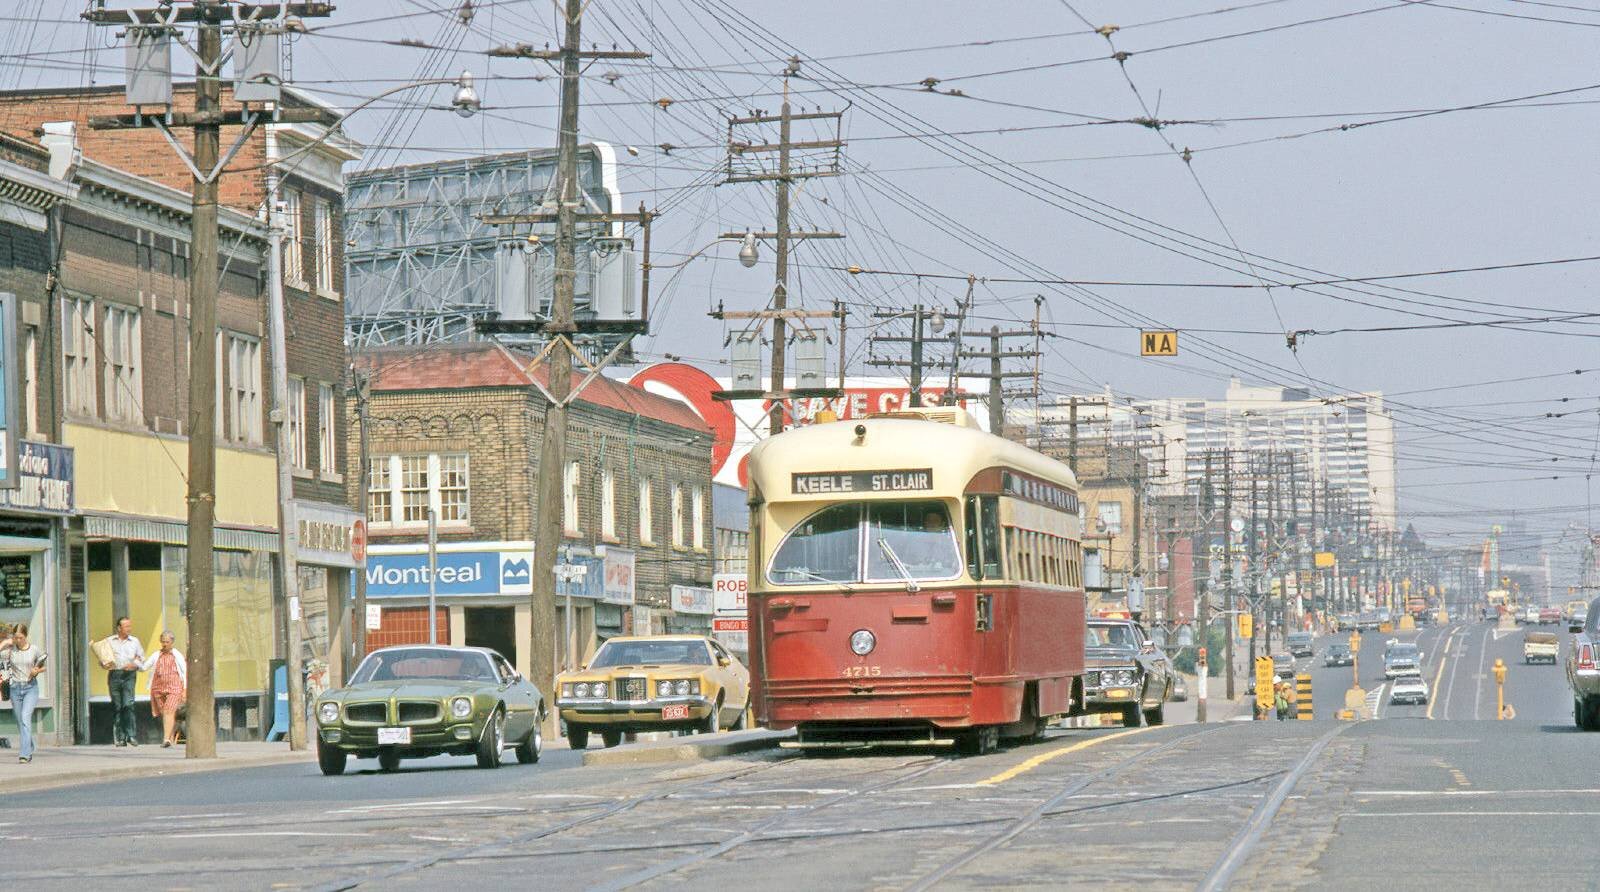 photo-toronto-st-clair-near-oakwood-looking-e-dominion-billboard-vaughan-theatre-in-distance-pcc-streetcar-wire-city-1972.jpg